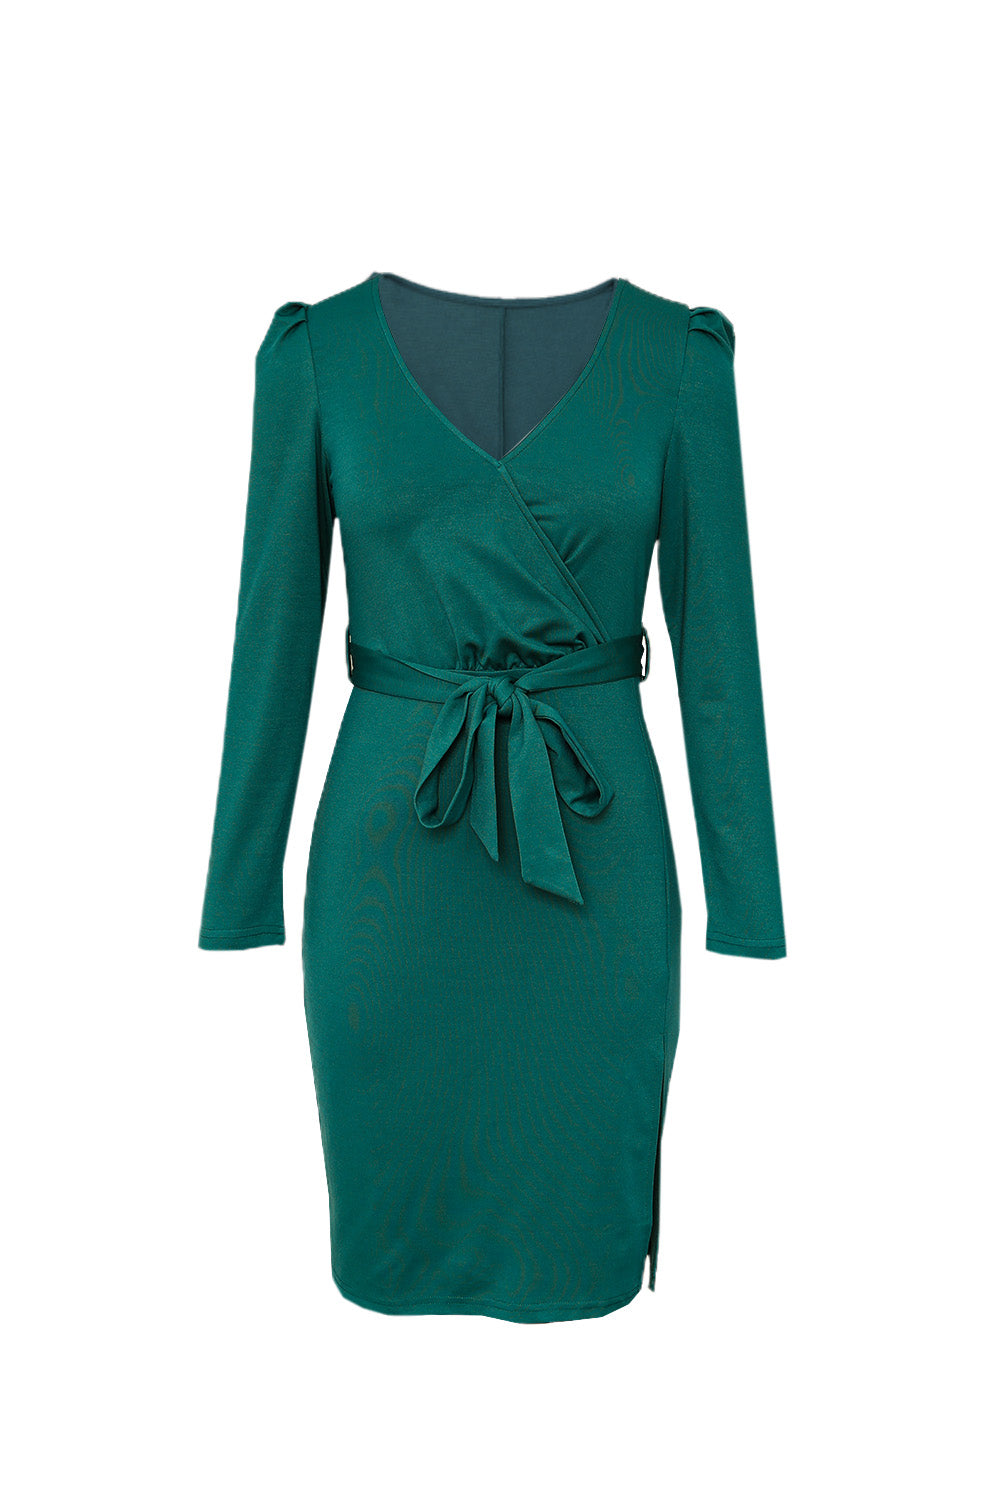 Green Ladies V Neck Long Sleeve Dress Side Split Bodycon Dress with Belt LC229110-9